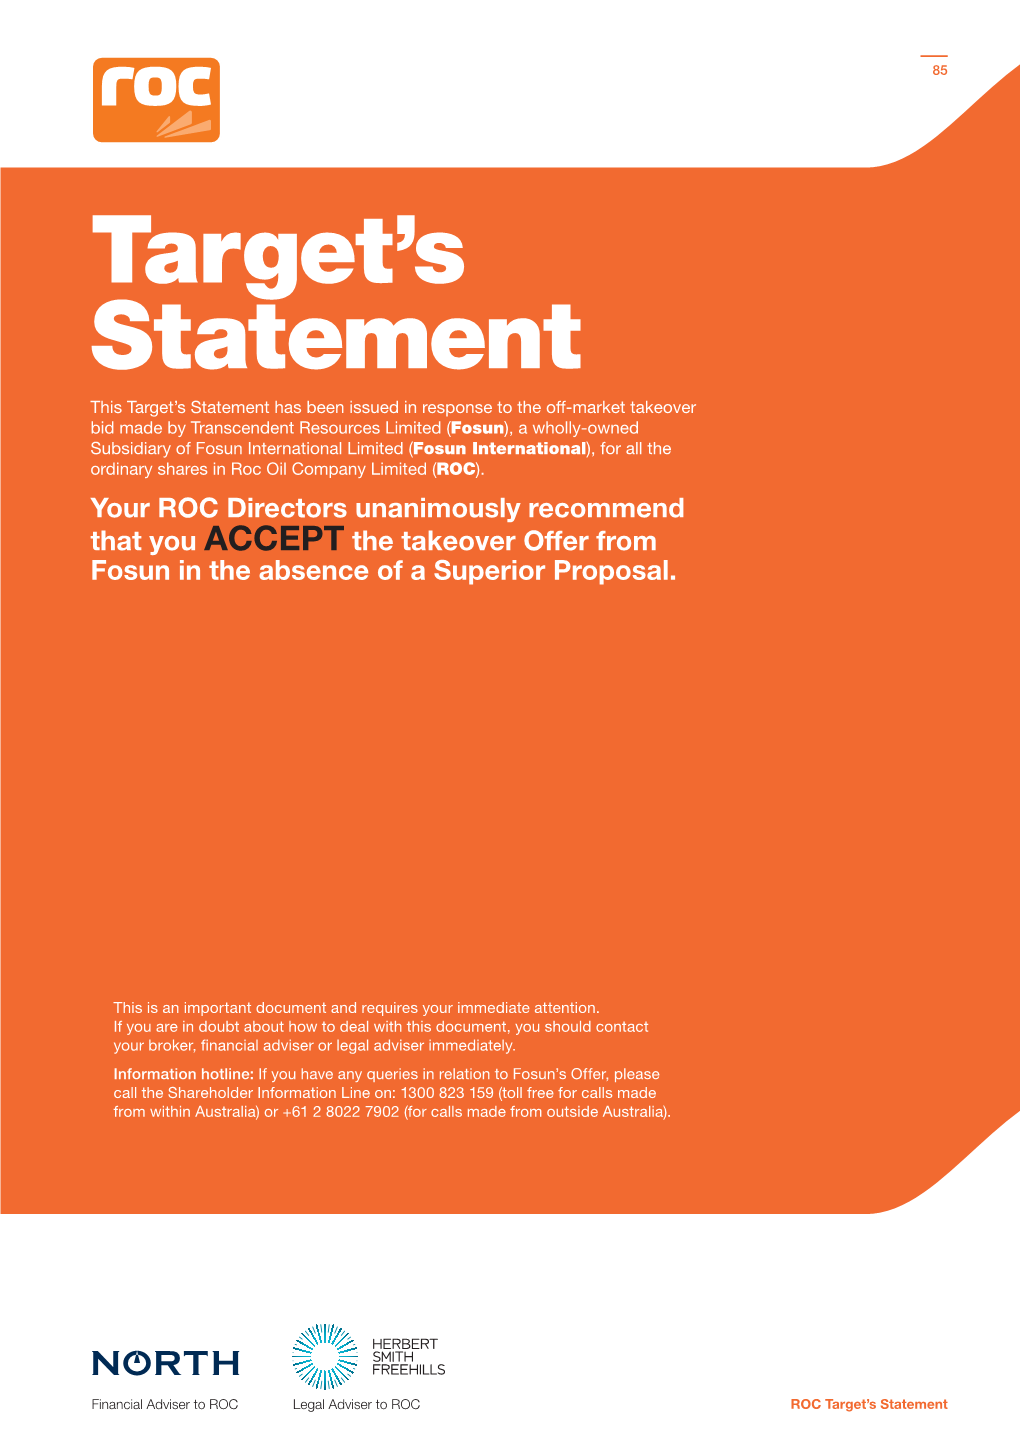 Target's Statement